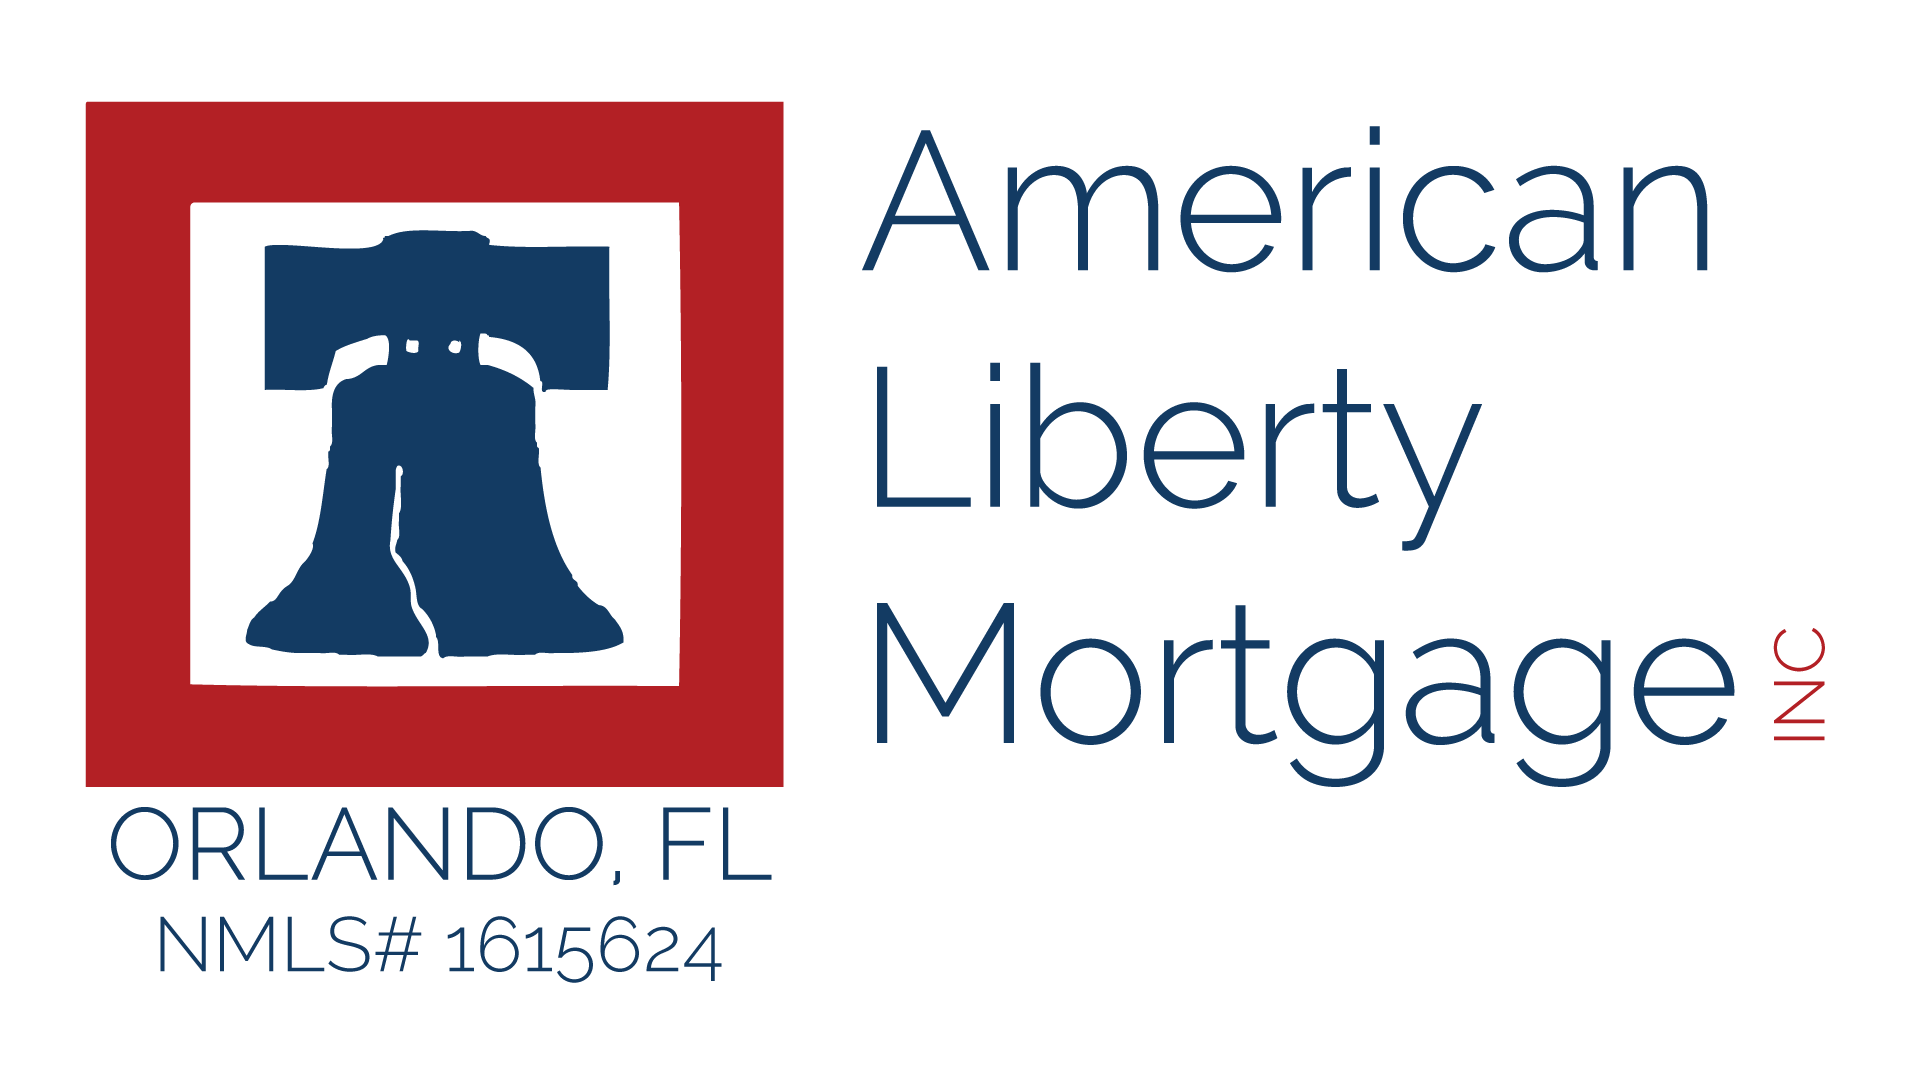 ALM Brand - American Liberty Mortgage, Inc.